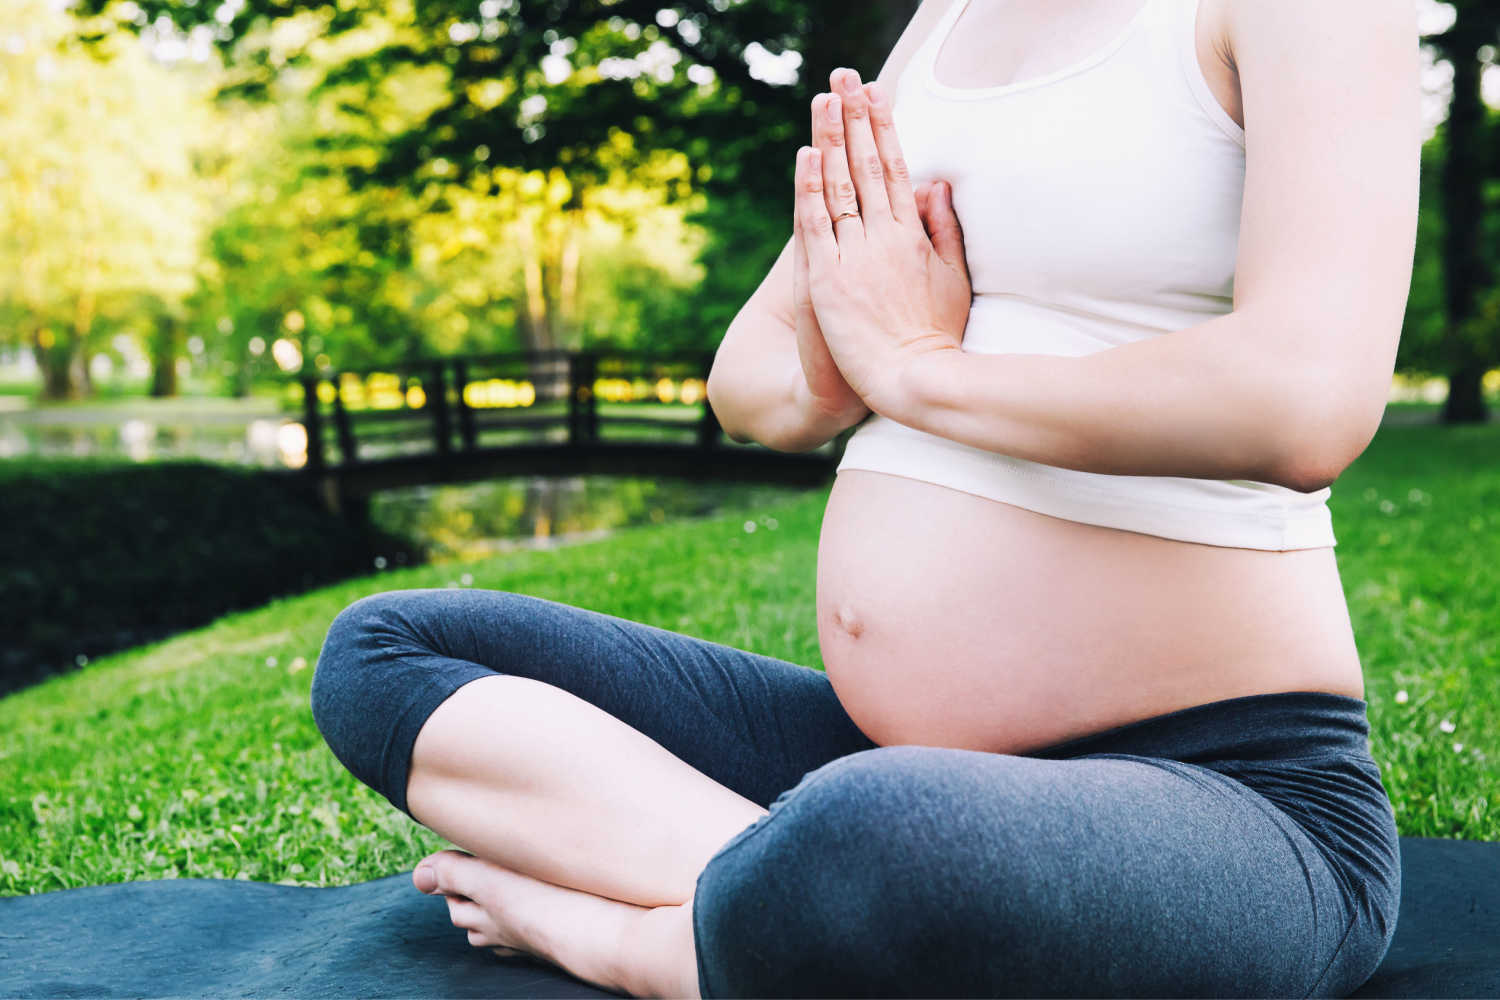 is prenatal yoga safe during pregnancy?